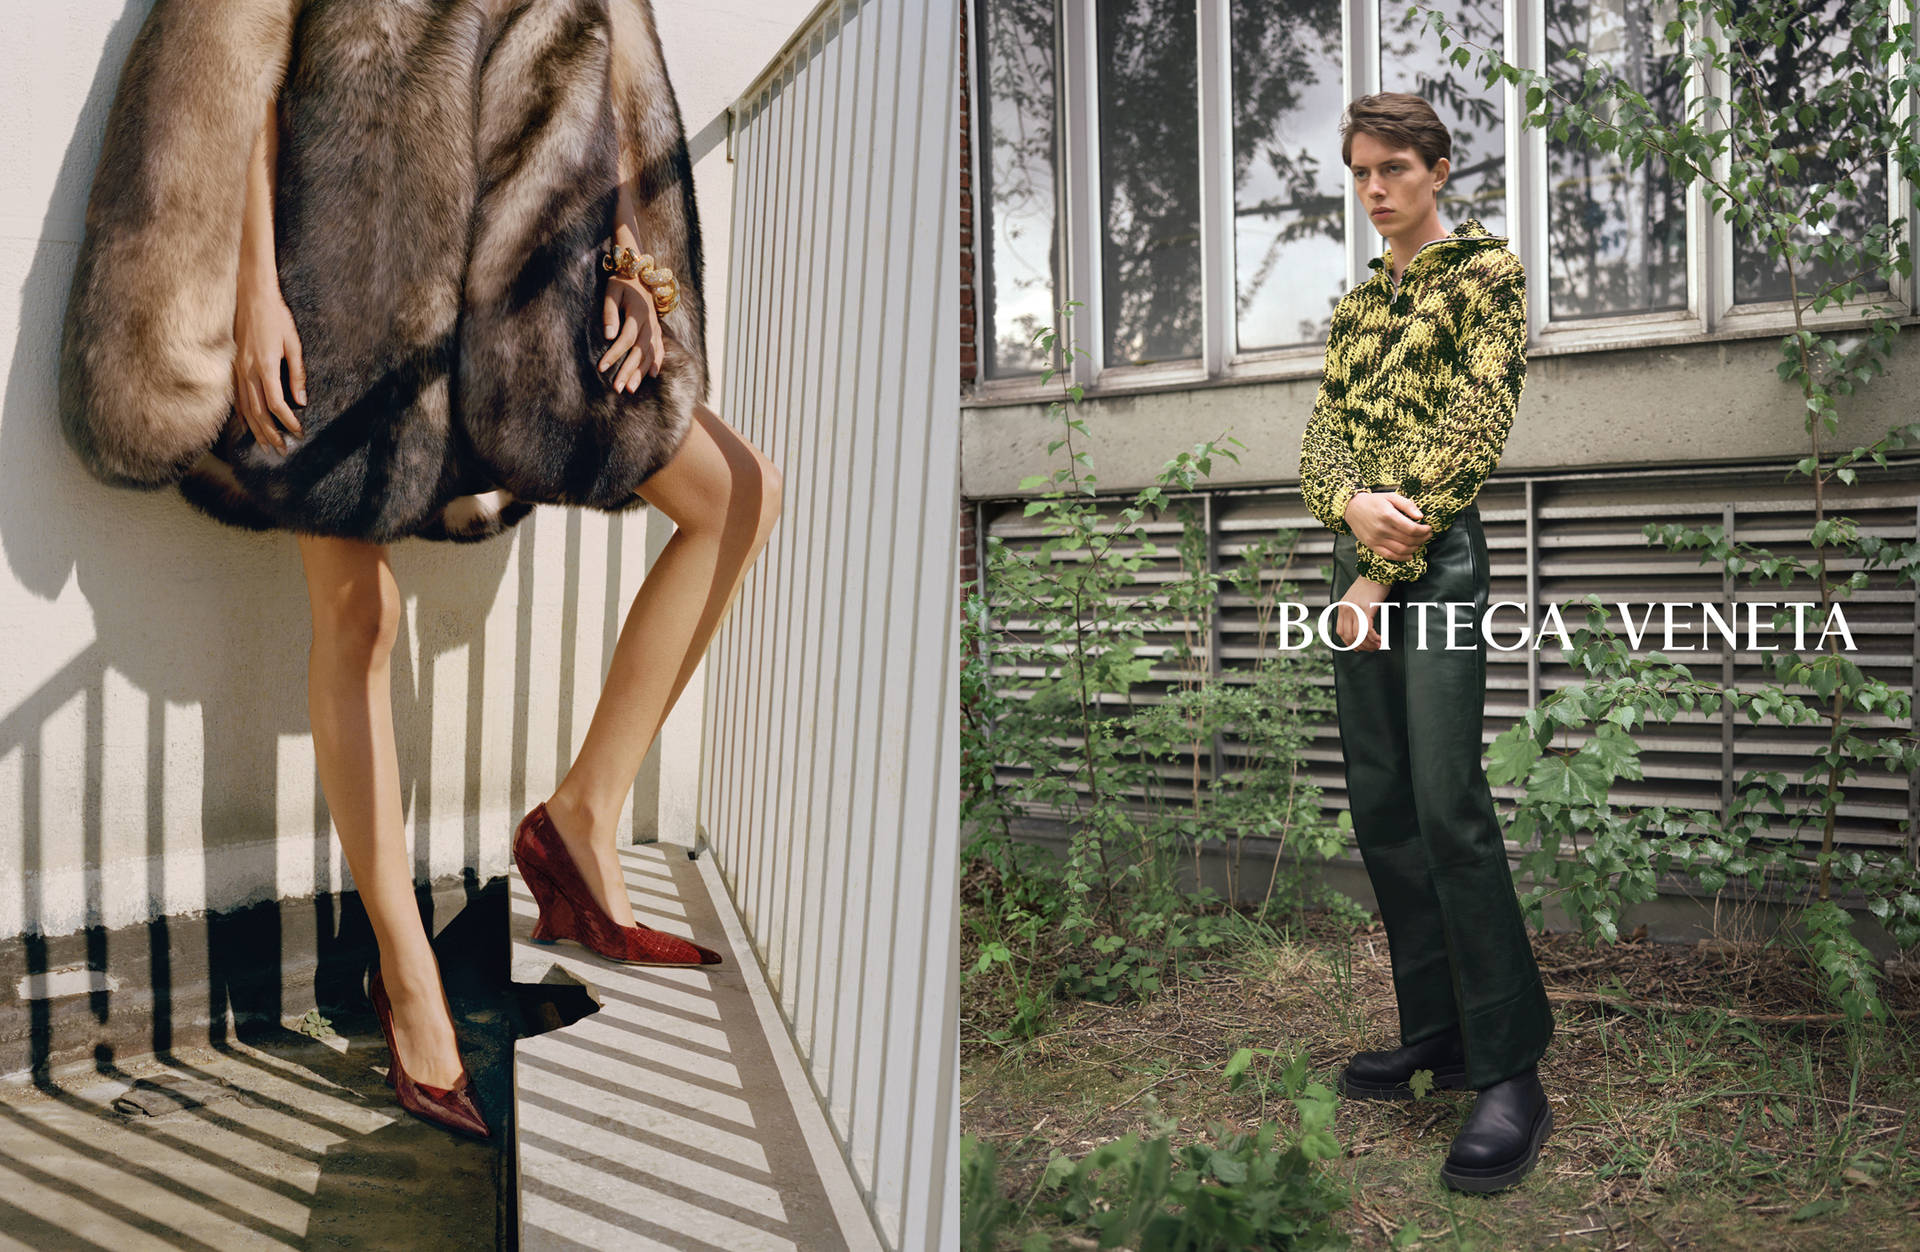 Two Photos Of Bottega Veneta Fashion Models Background